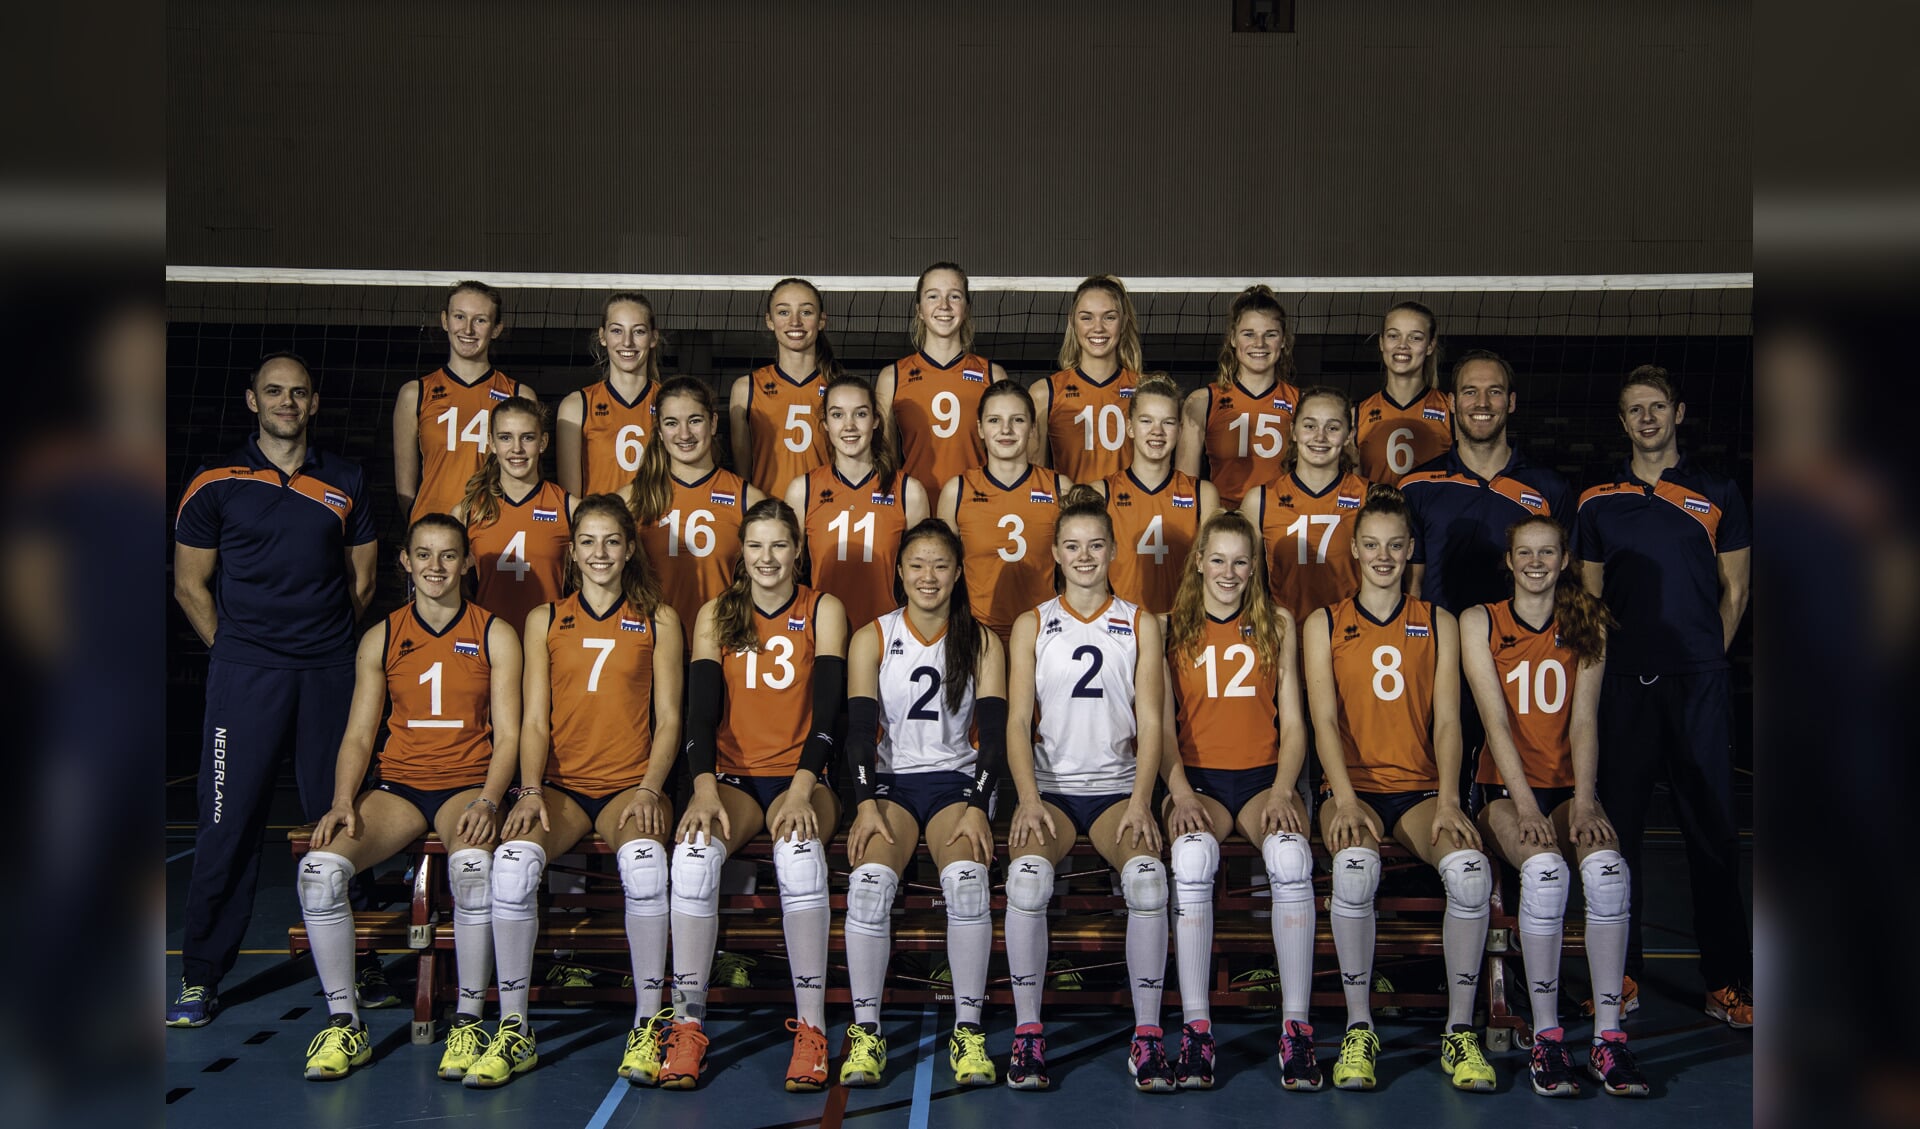 Teamfoto van de jeugd van Oranje. 